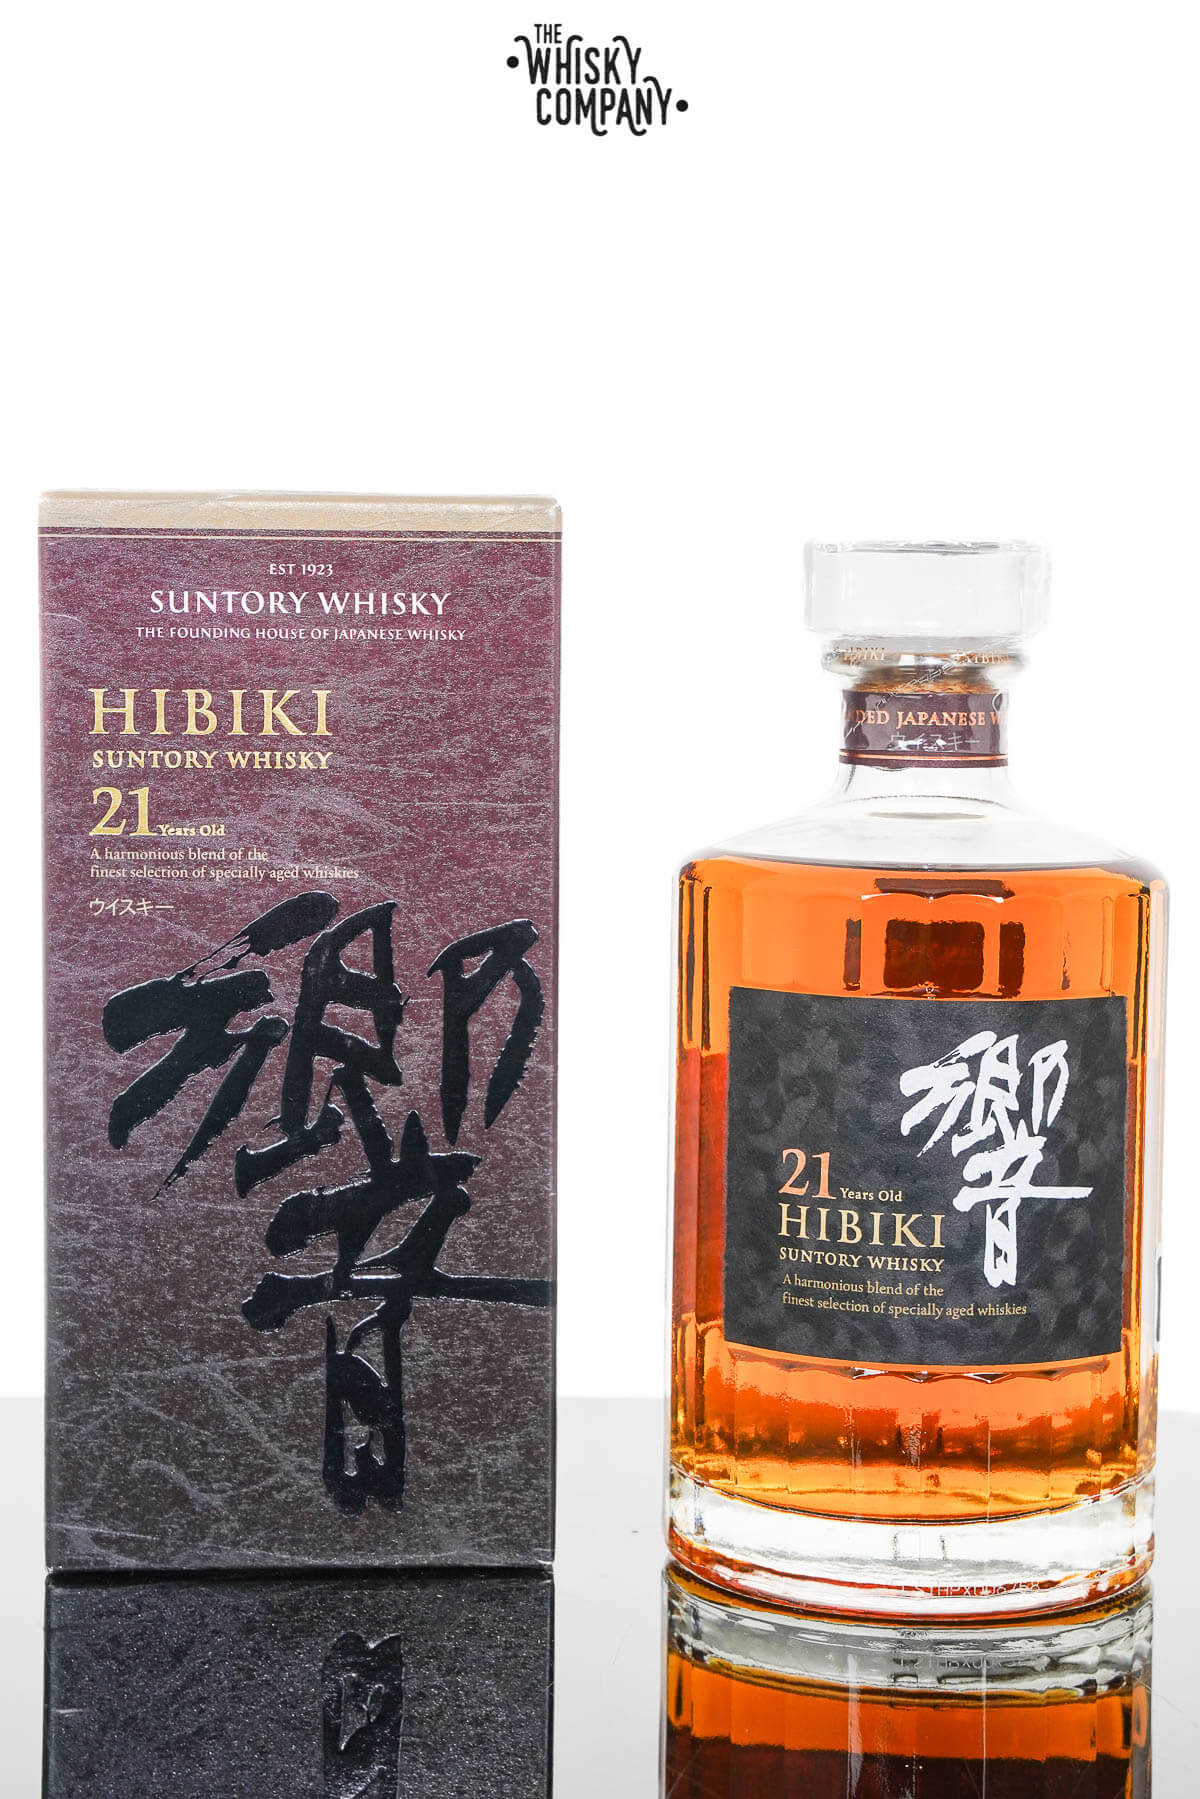 Hibiki 12 Years Old - Suntory Whisky 43% (in the purple box)